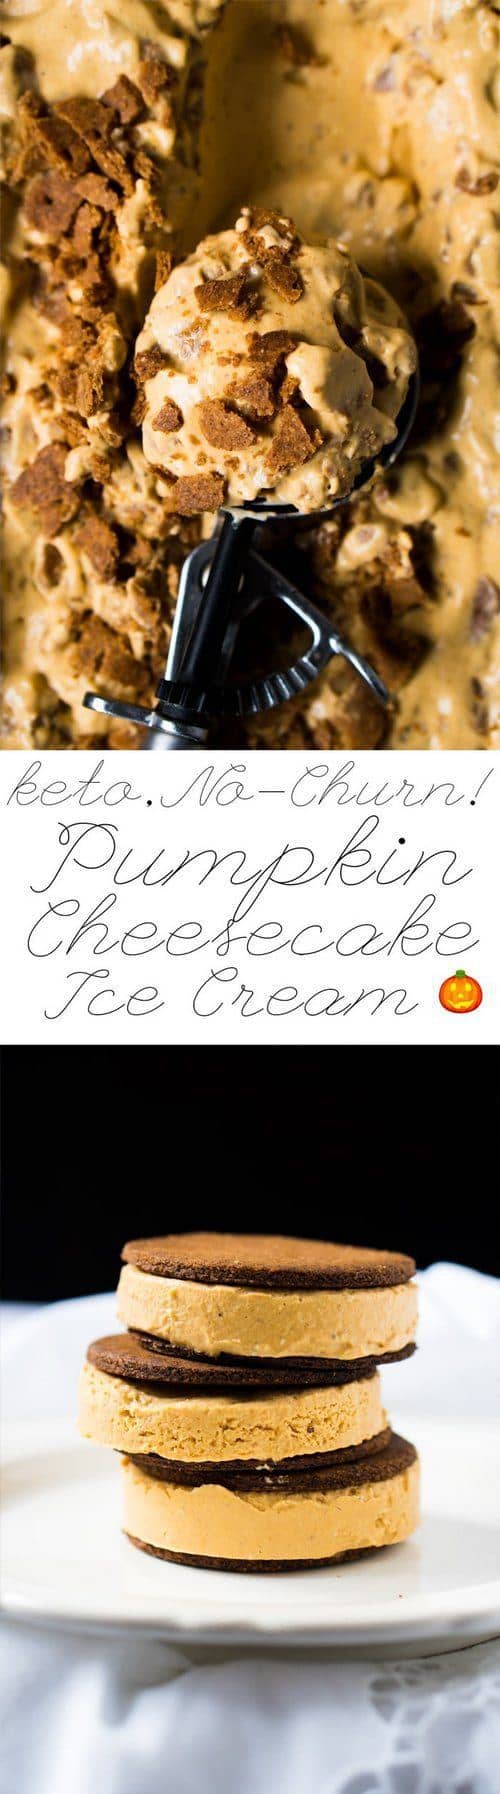 keto-pumpkin-cheesecake-ice-cream